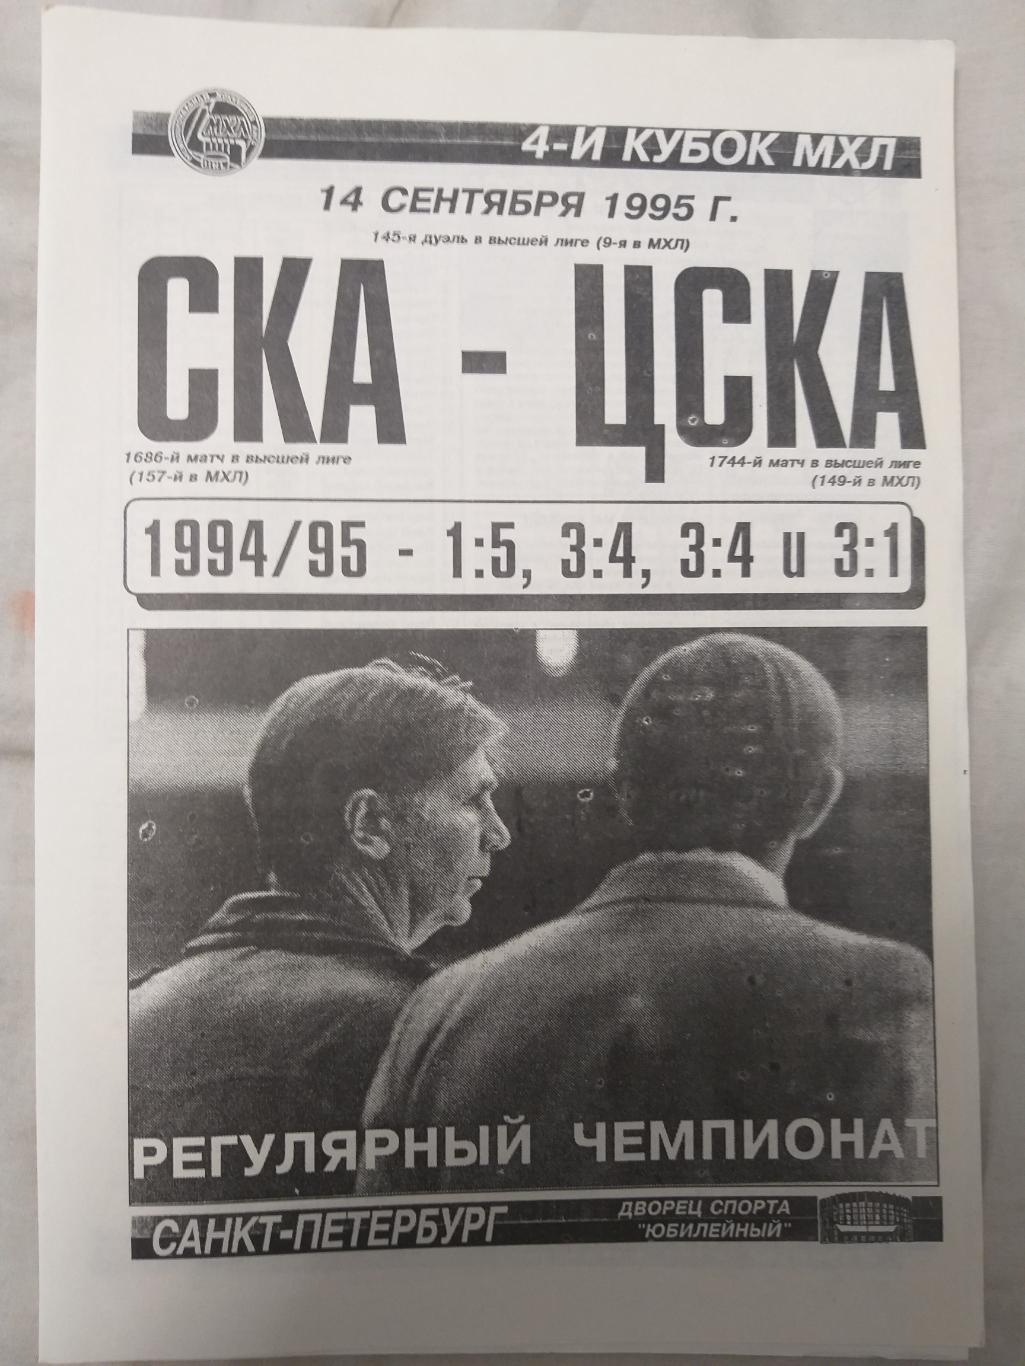 СКА-ЦСКА 14.09.1995